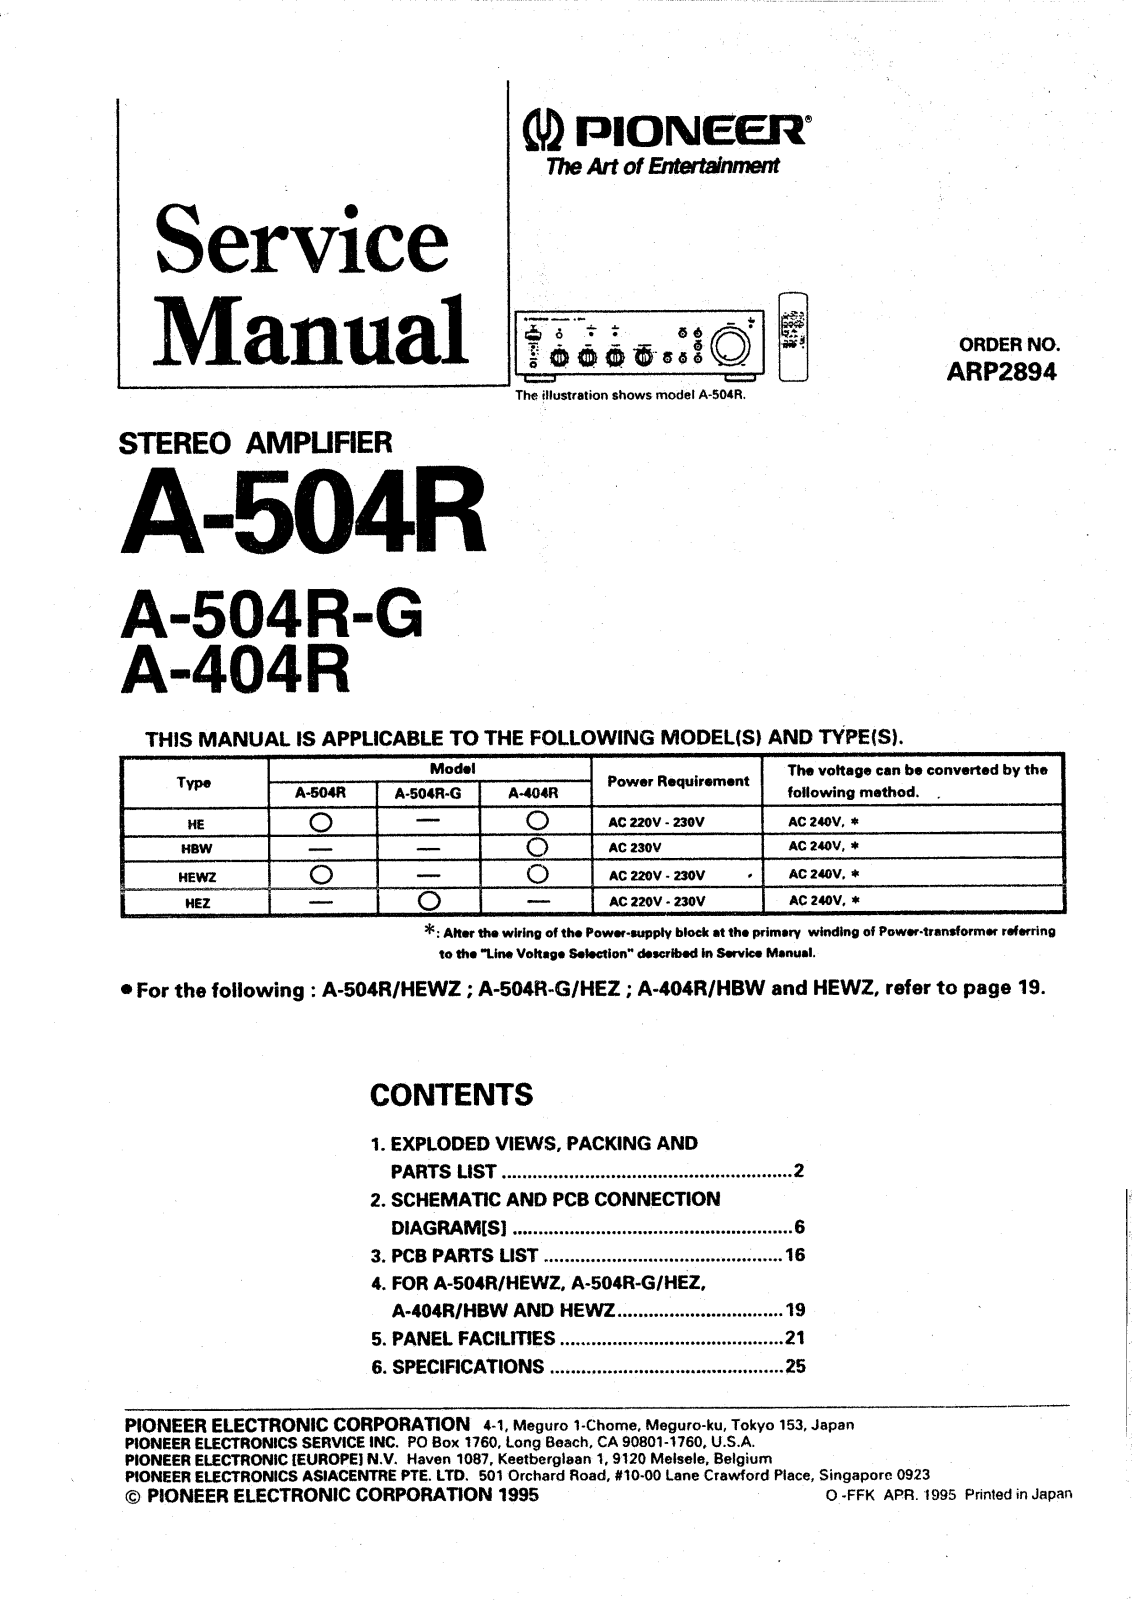 Pioneer A-504-R Service manual